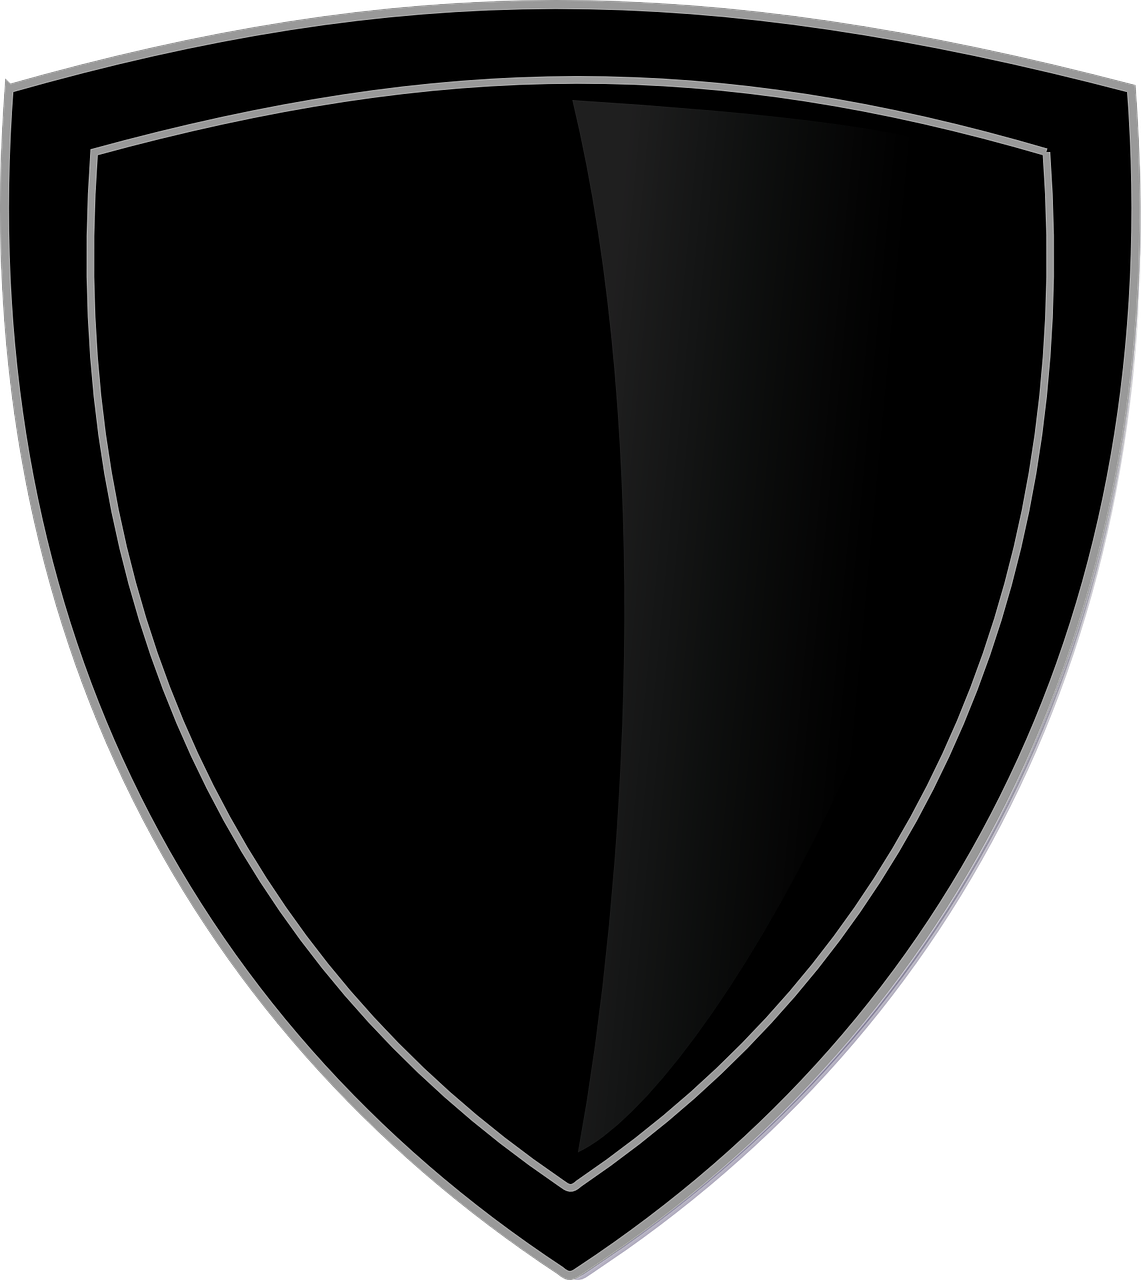 shield logo plain free photo